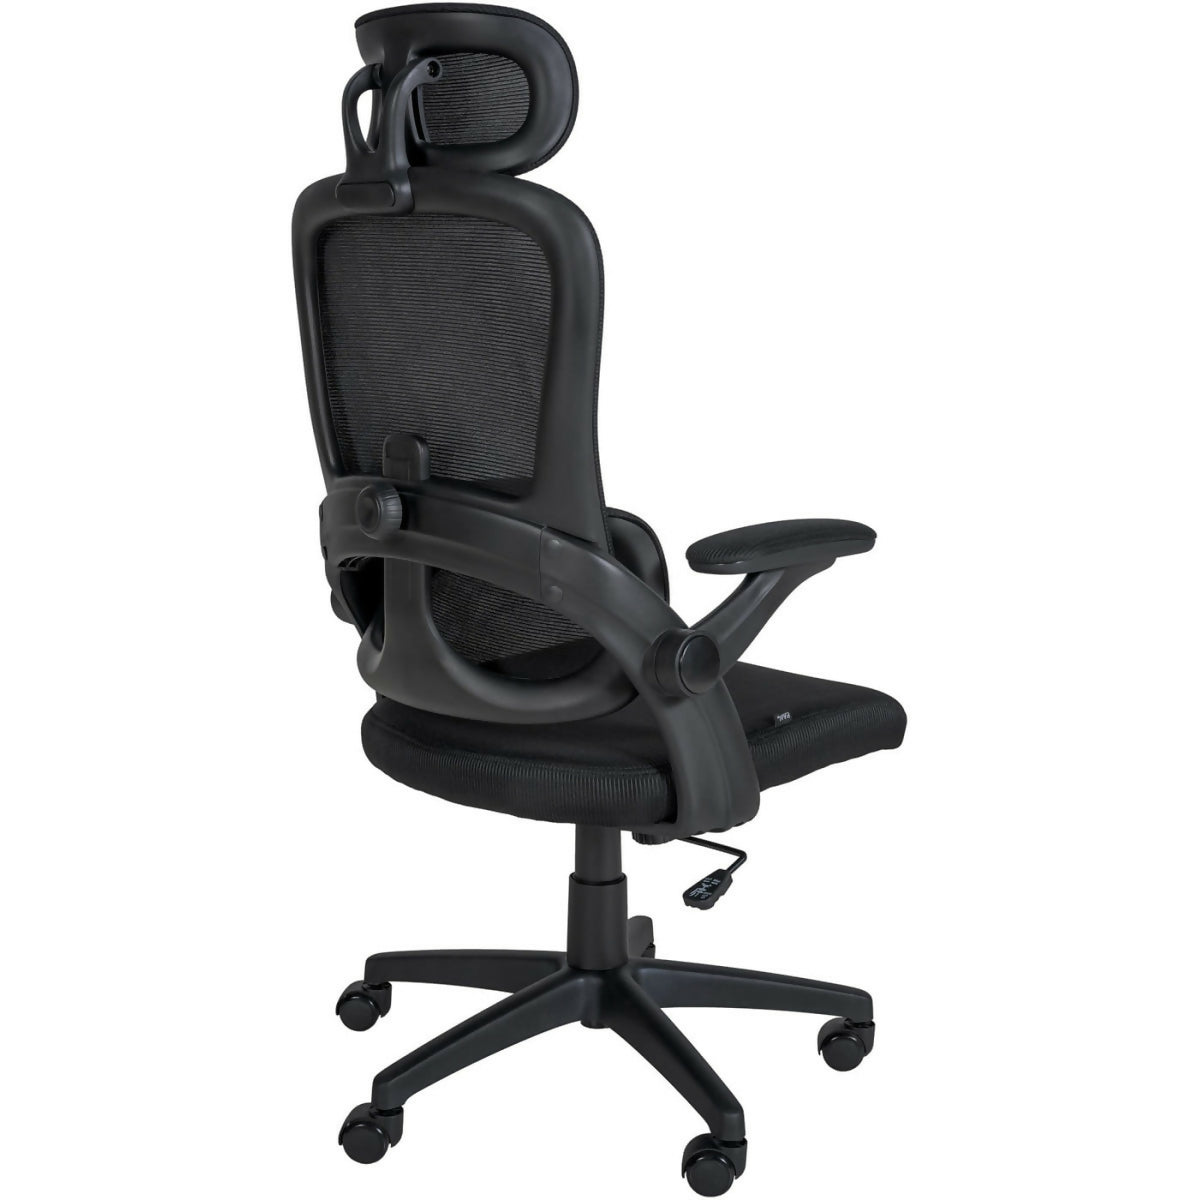 Garston office chair - Black fabric